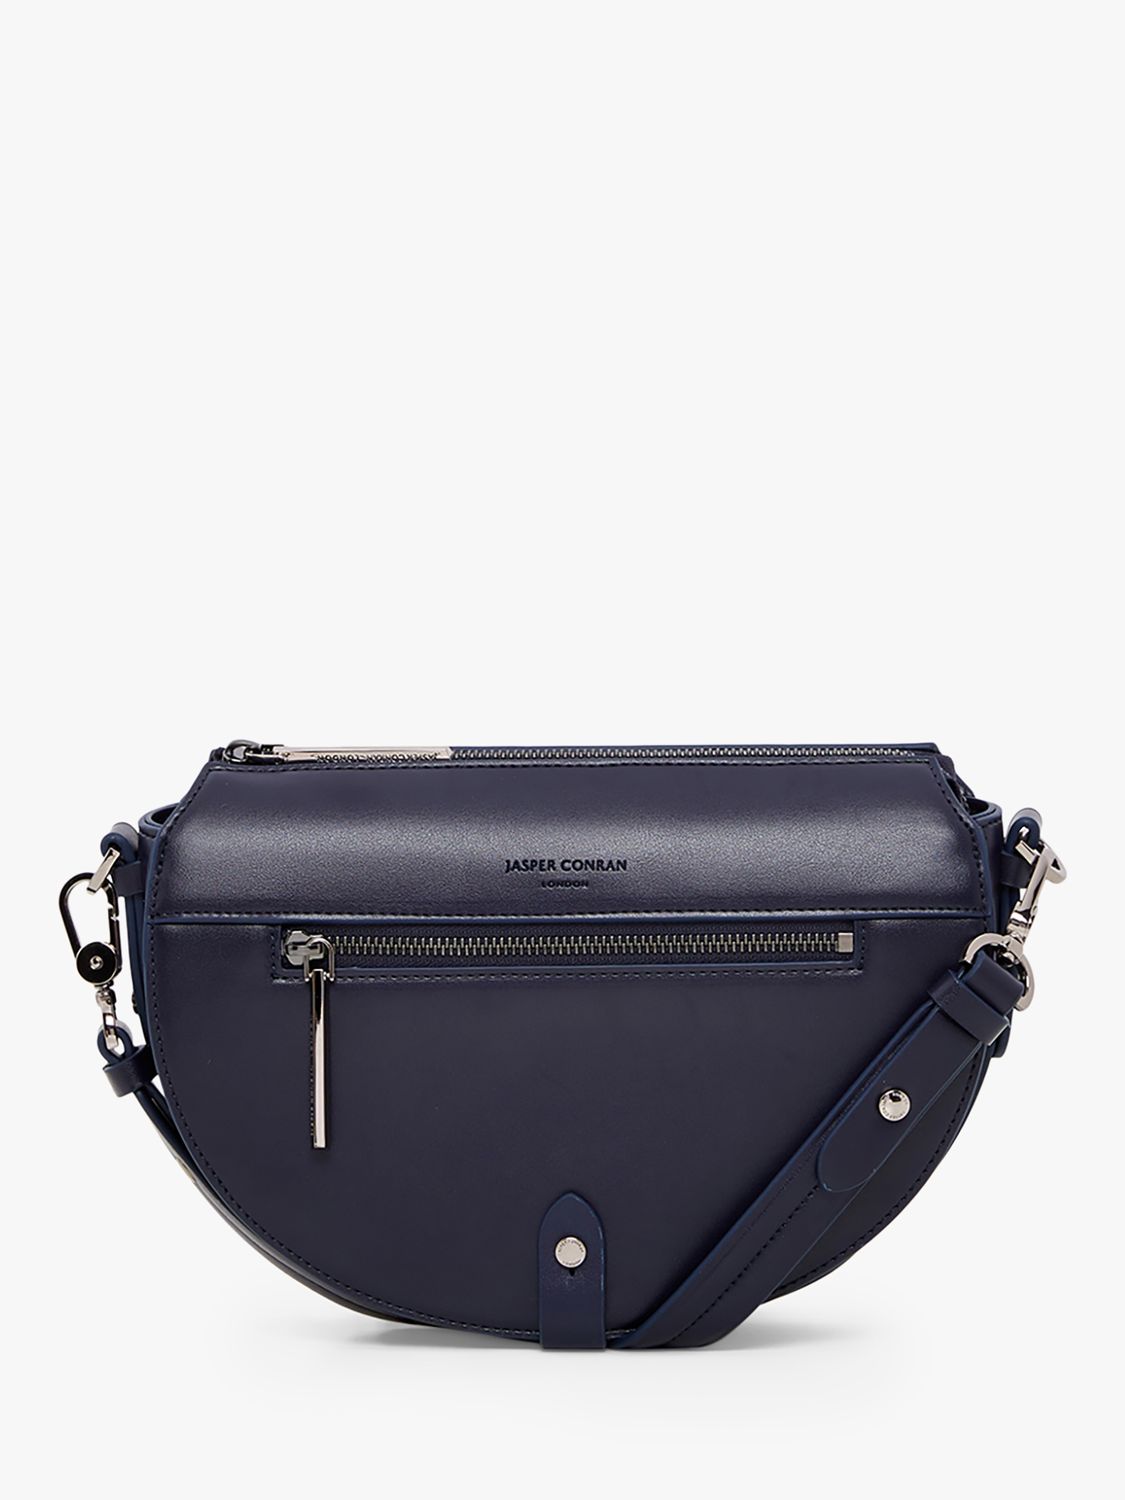 Jasper Conran London Dahlia Седельная сумка, темно-синий цена и фото